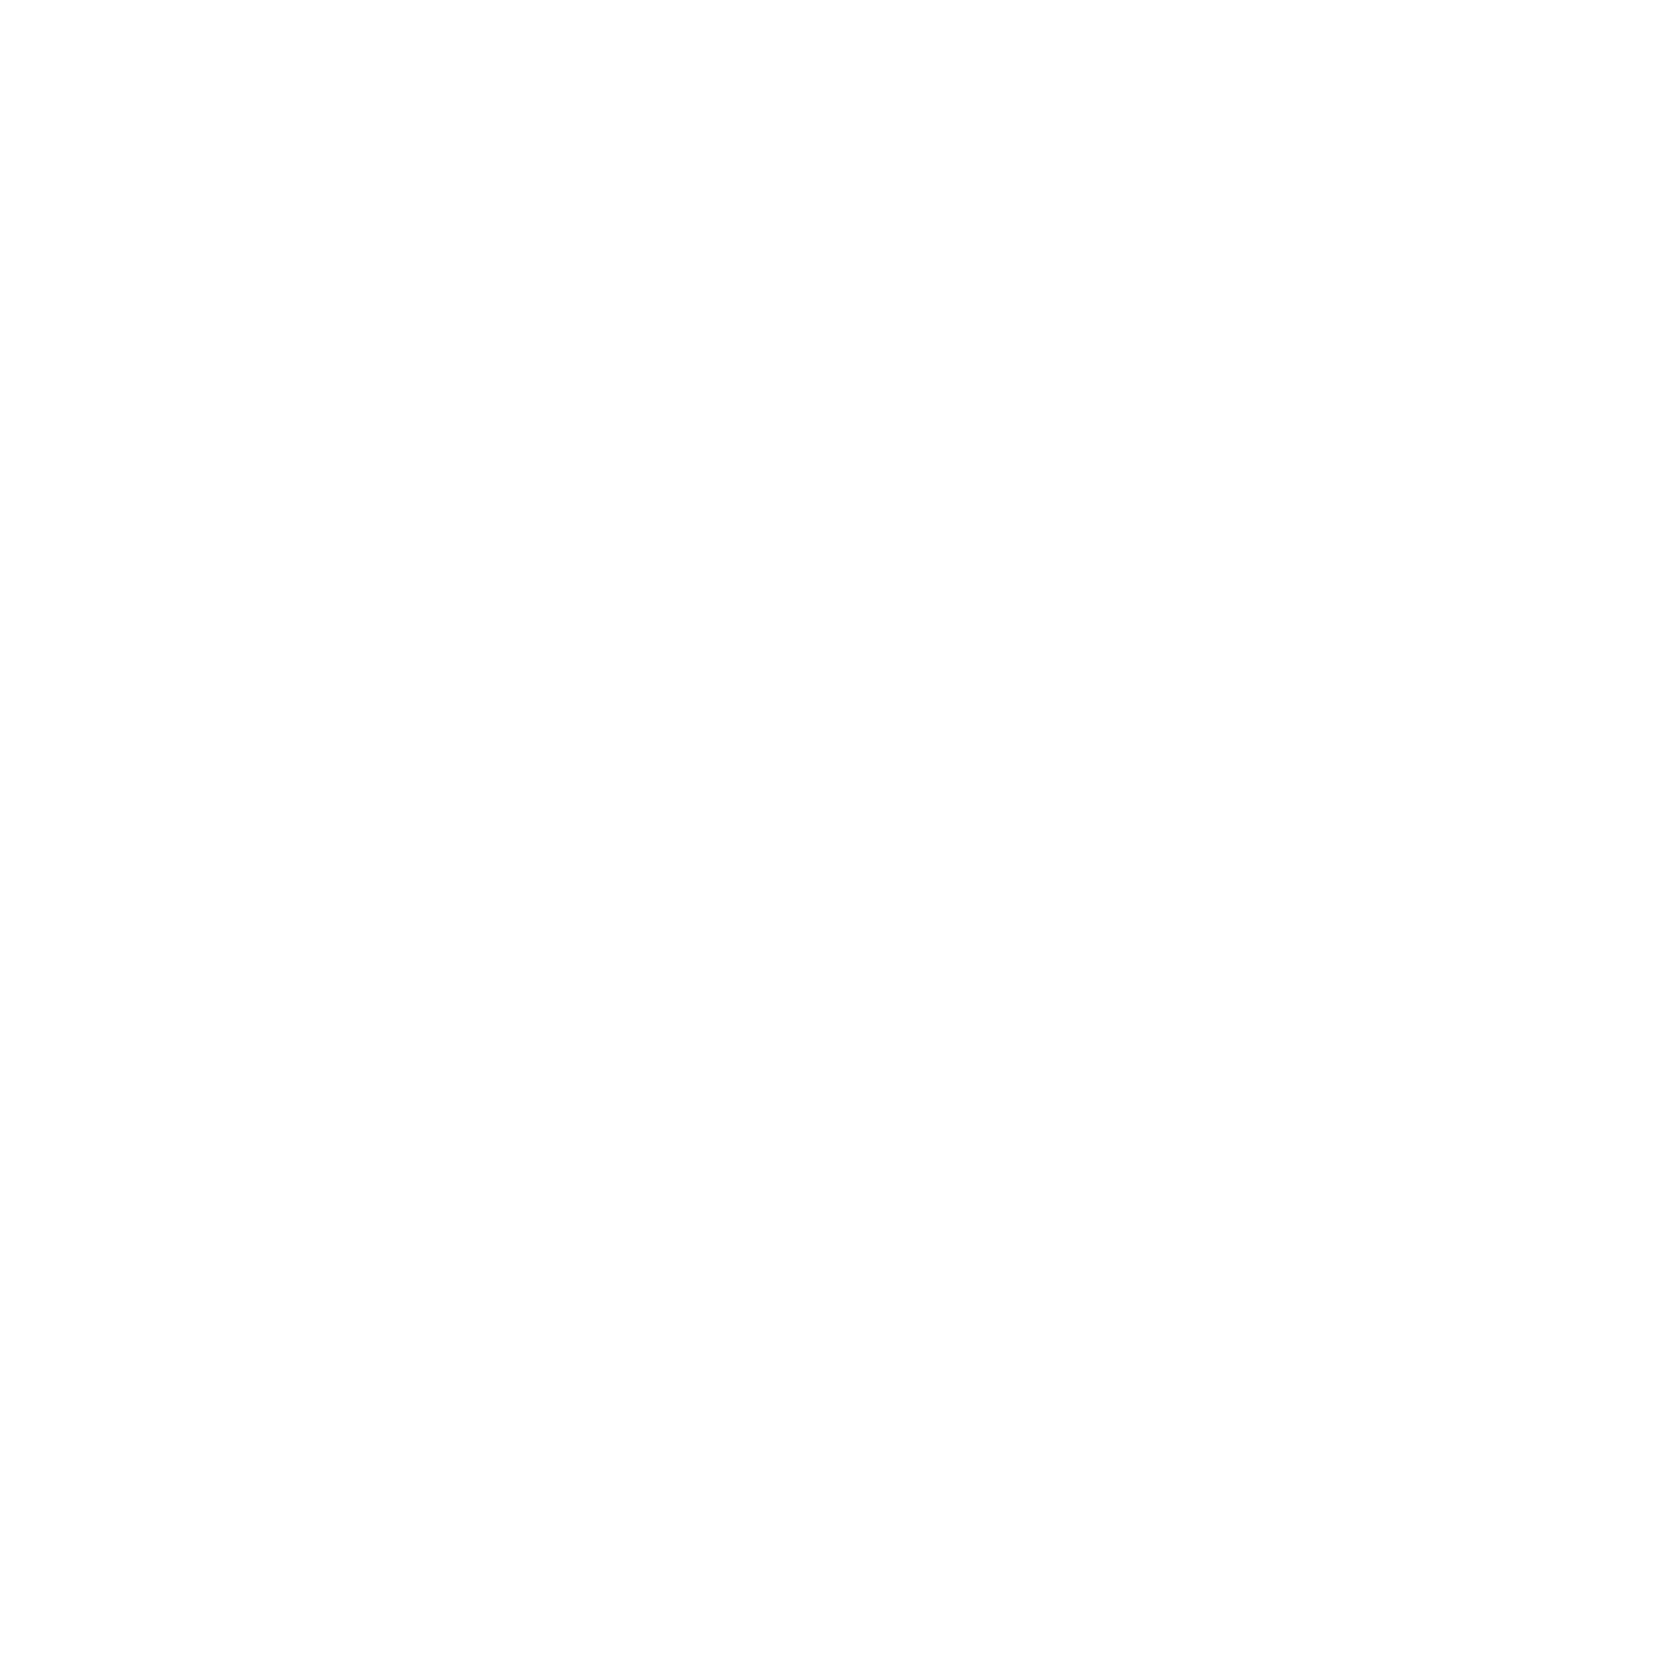 Illustration Team under one umbrella